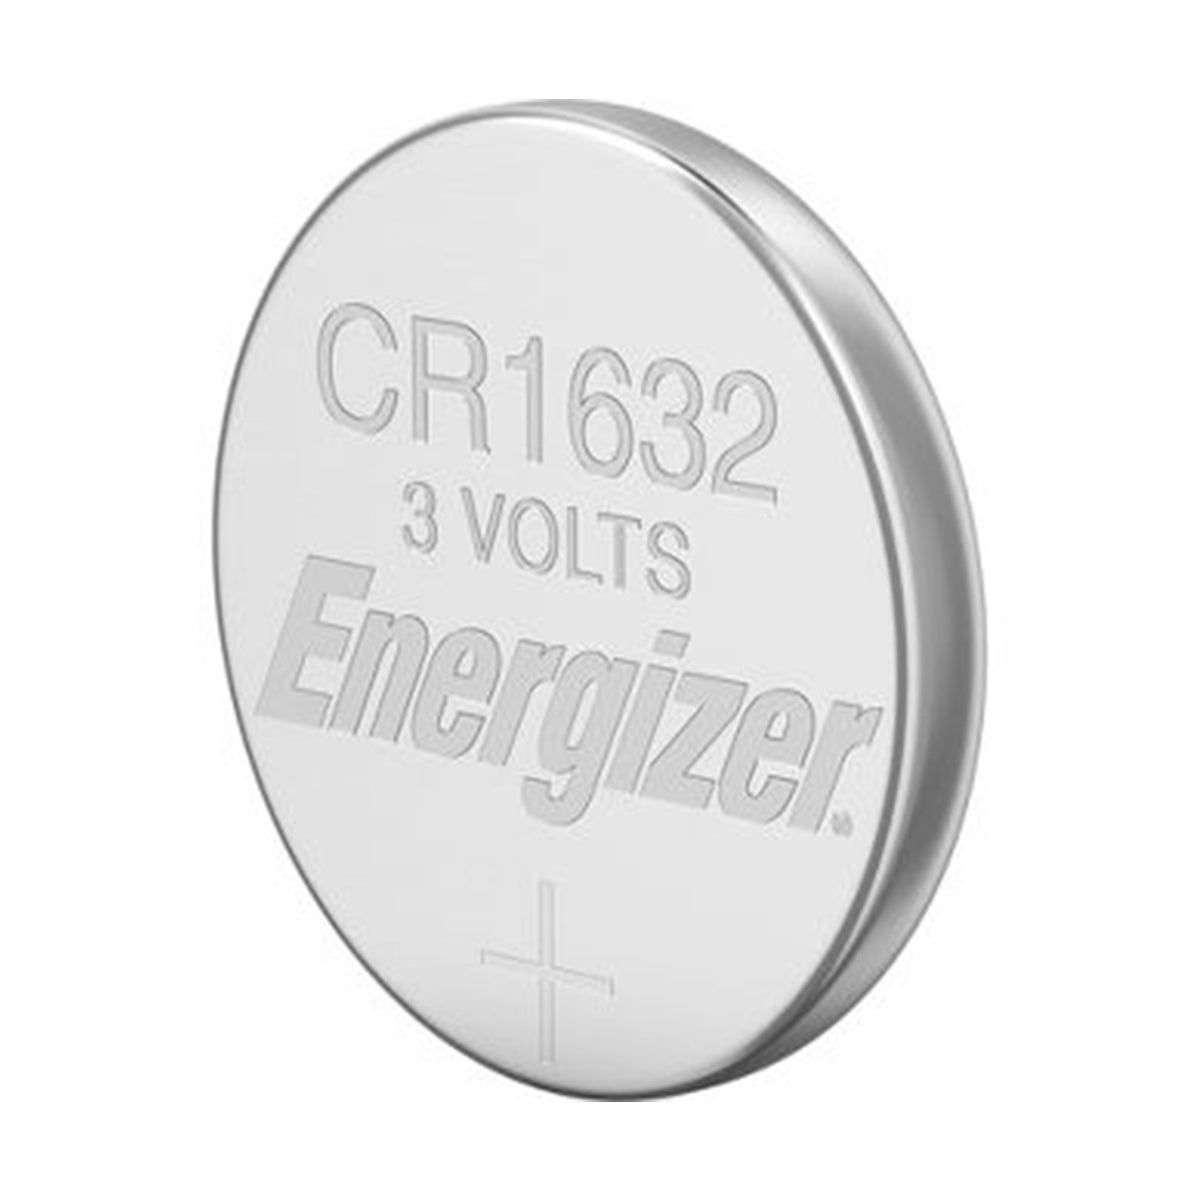 Energizer CR1632 Coin Lithium Battery (3V, 130mAh)